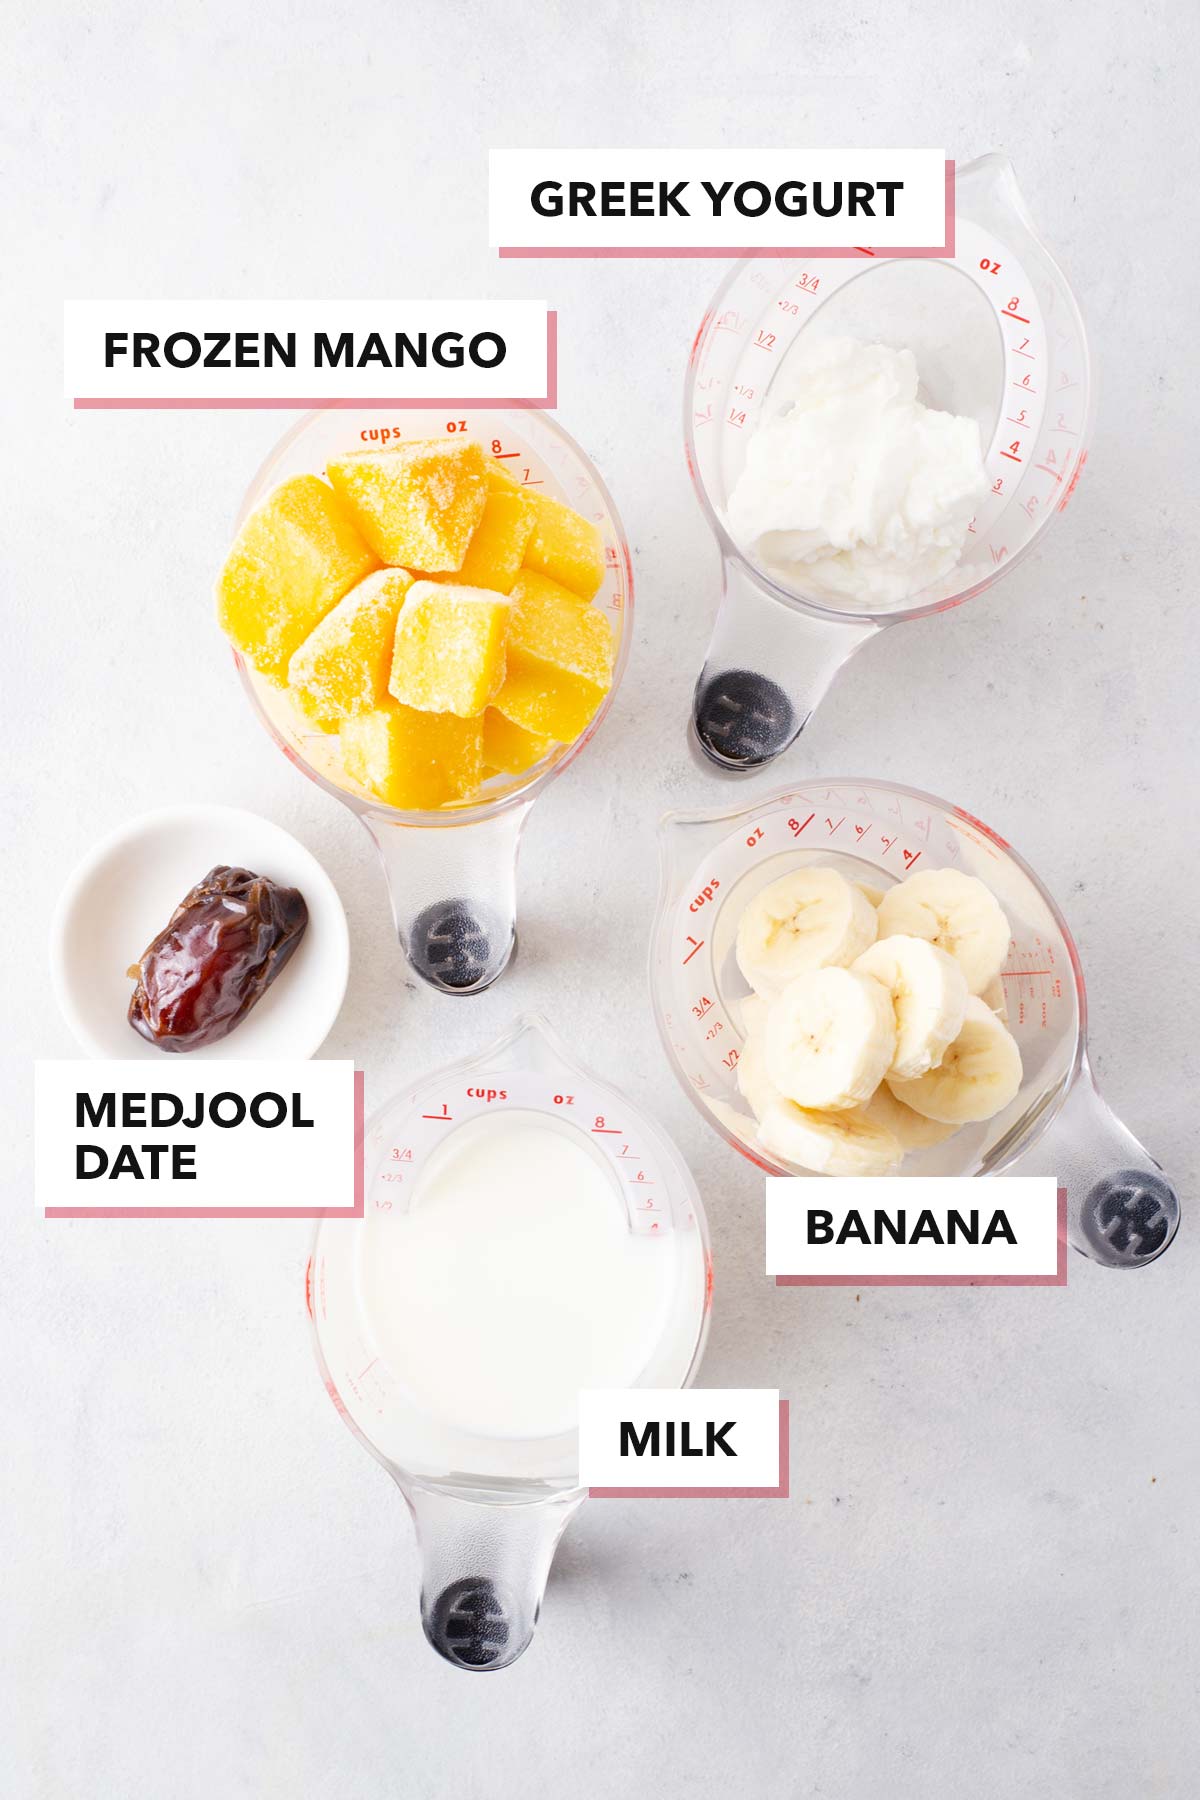 Ingredients to make a mango yogurt smoothie on a table.